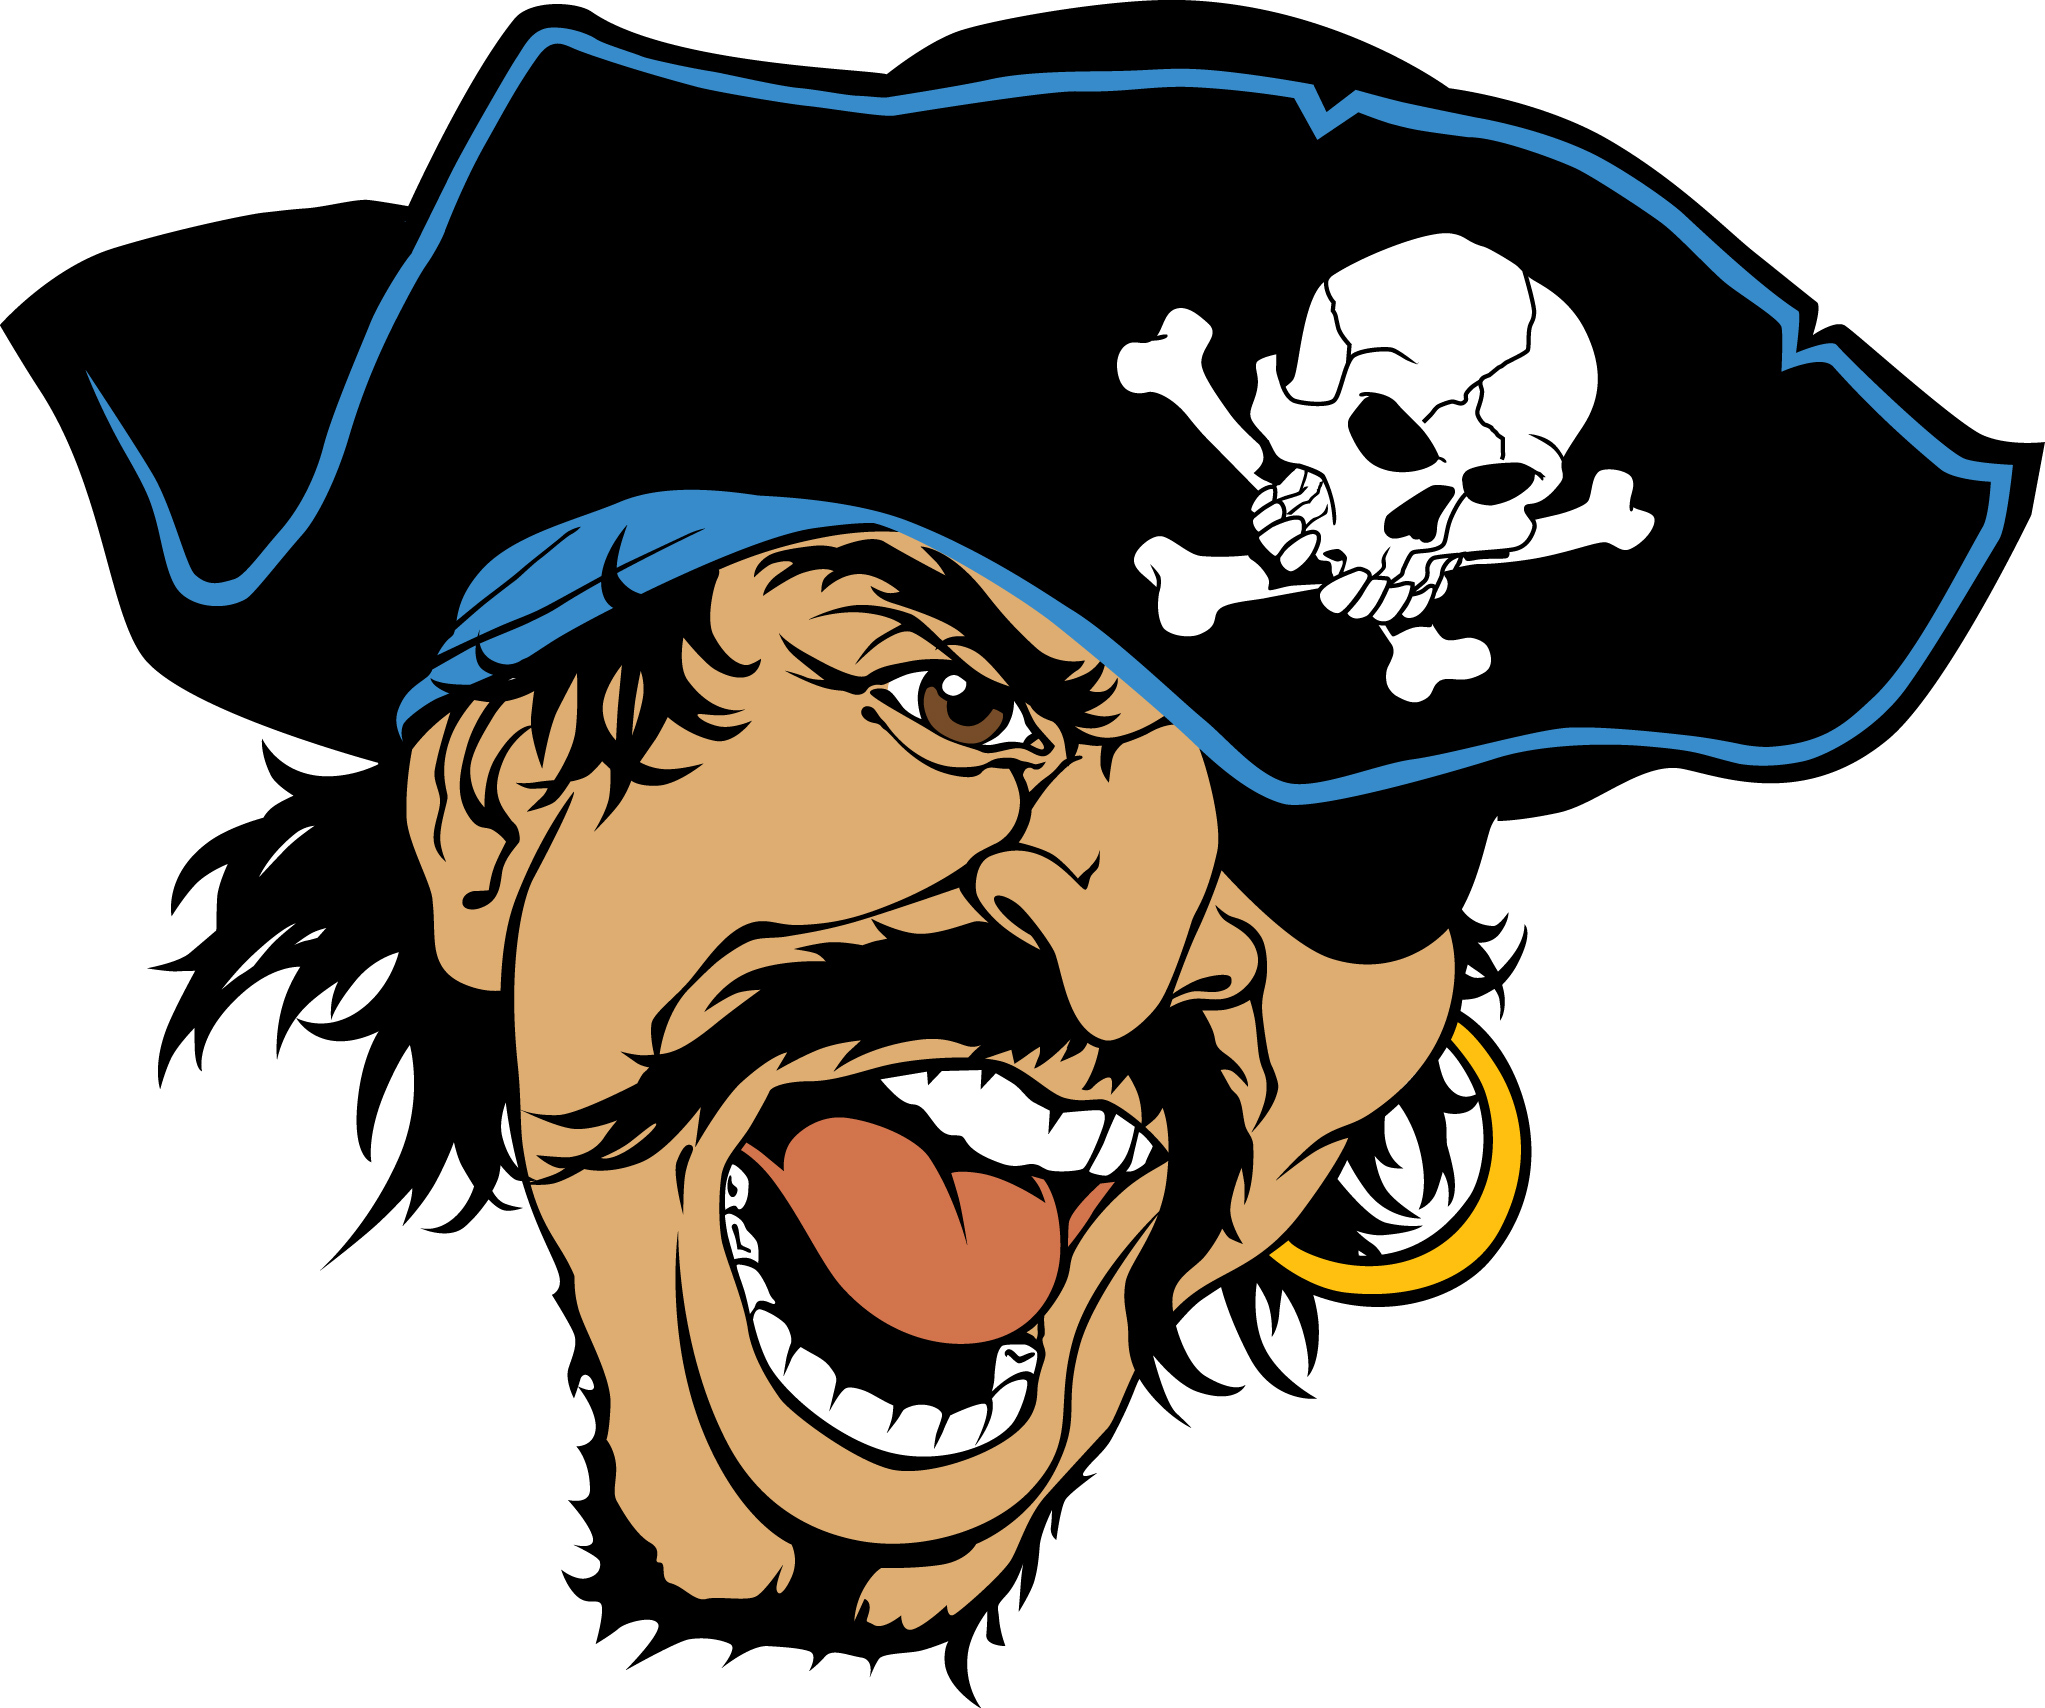 Pirate Image